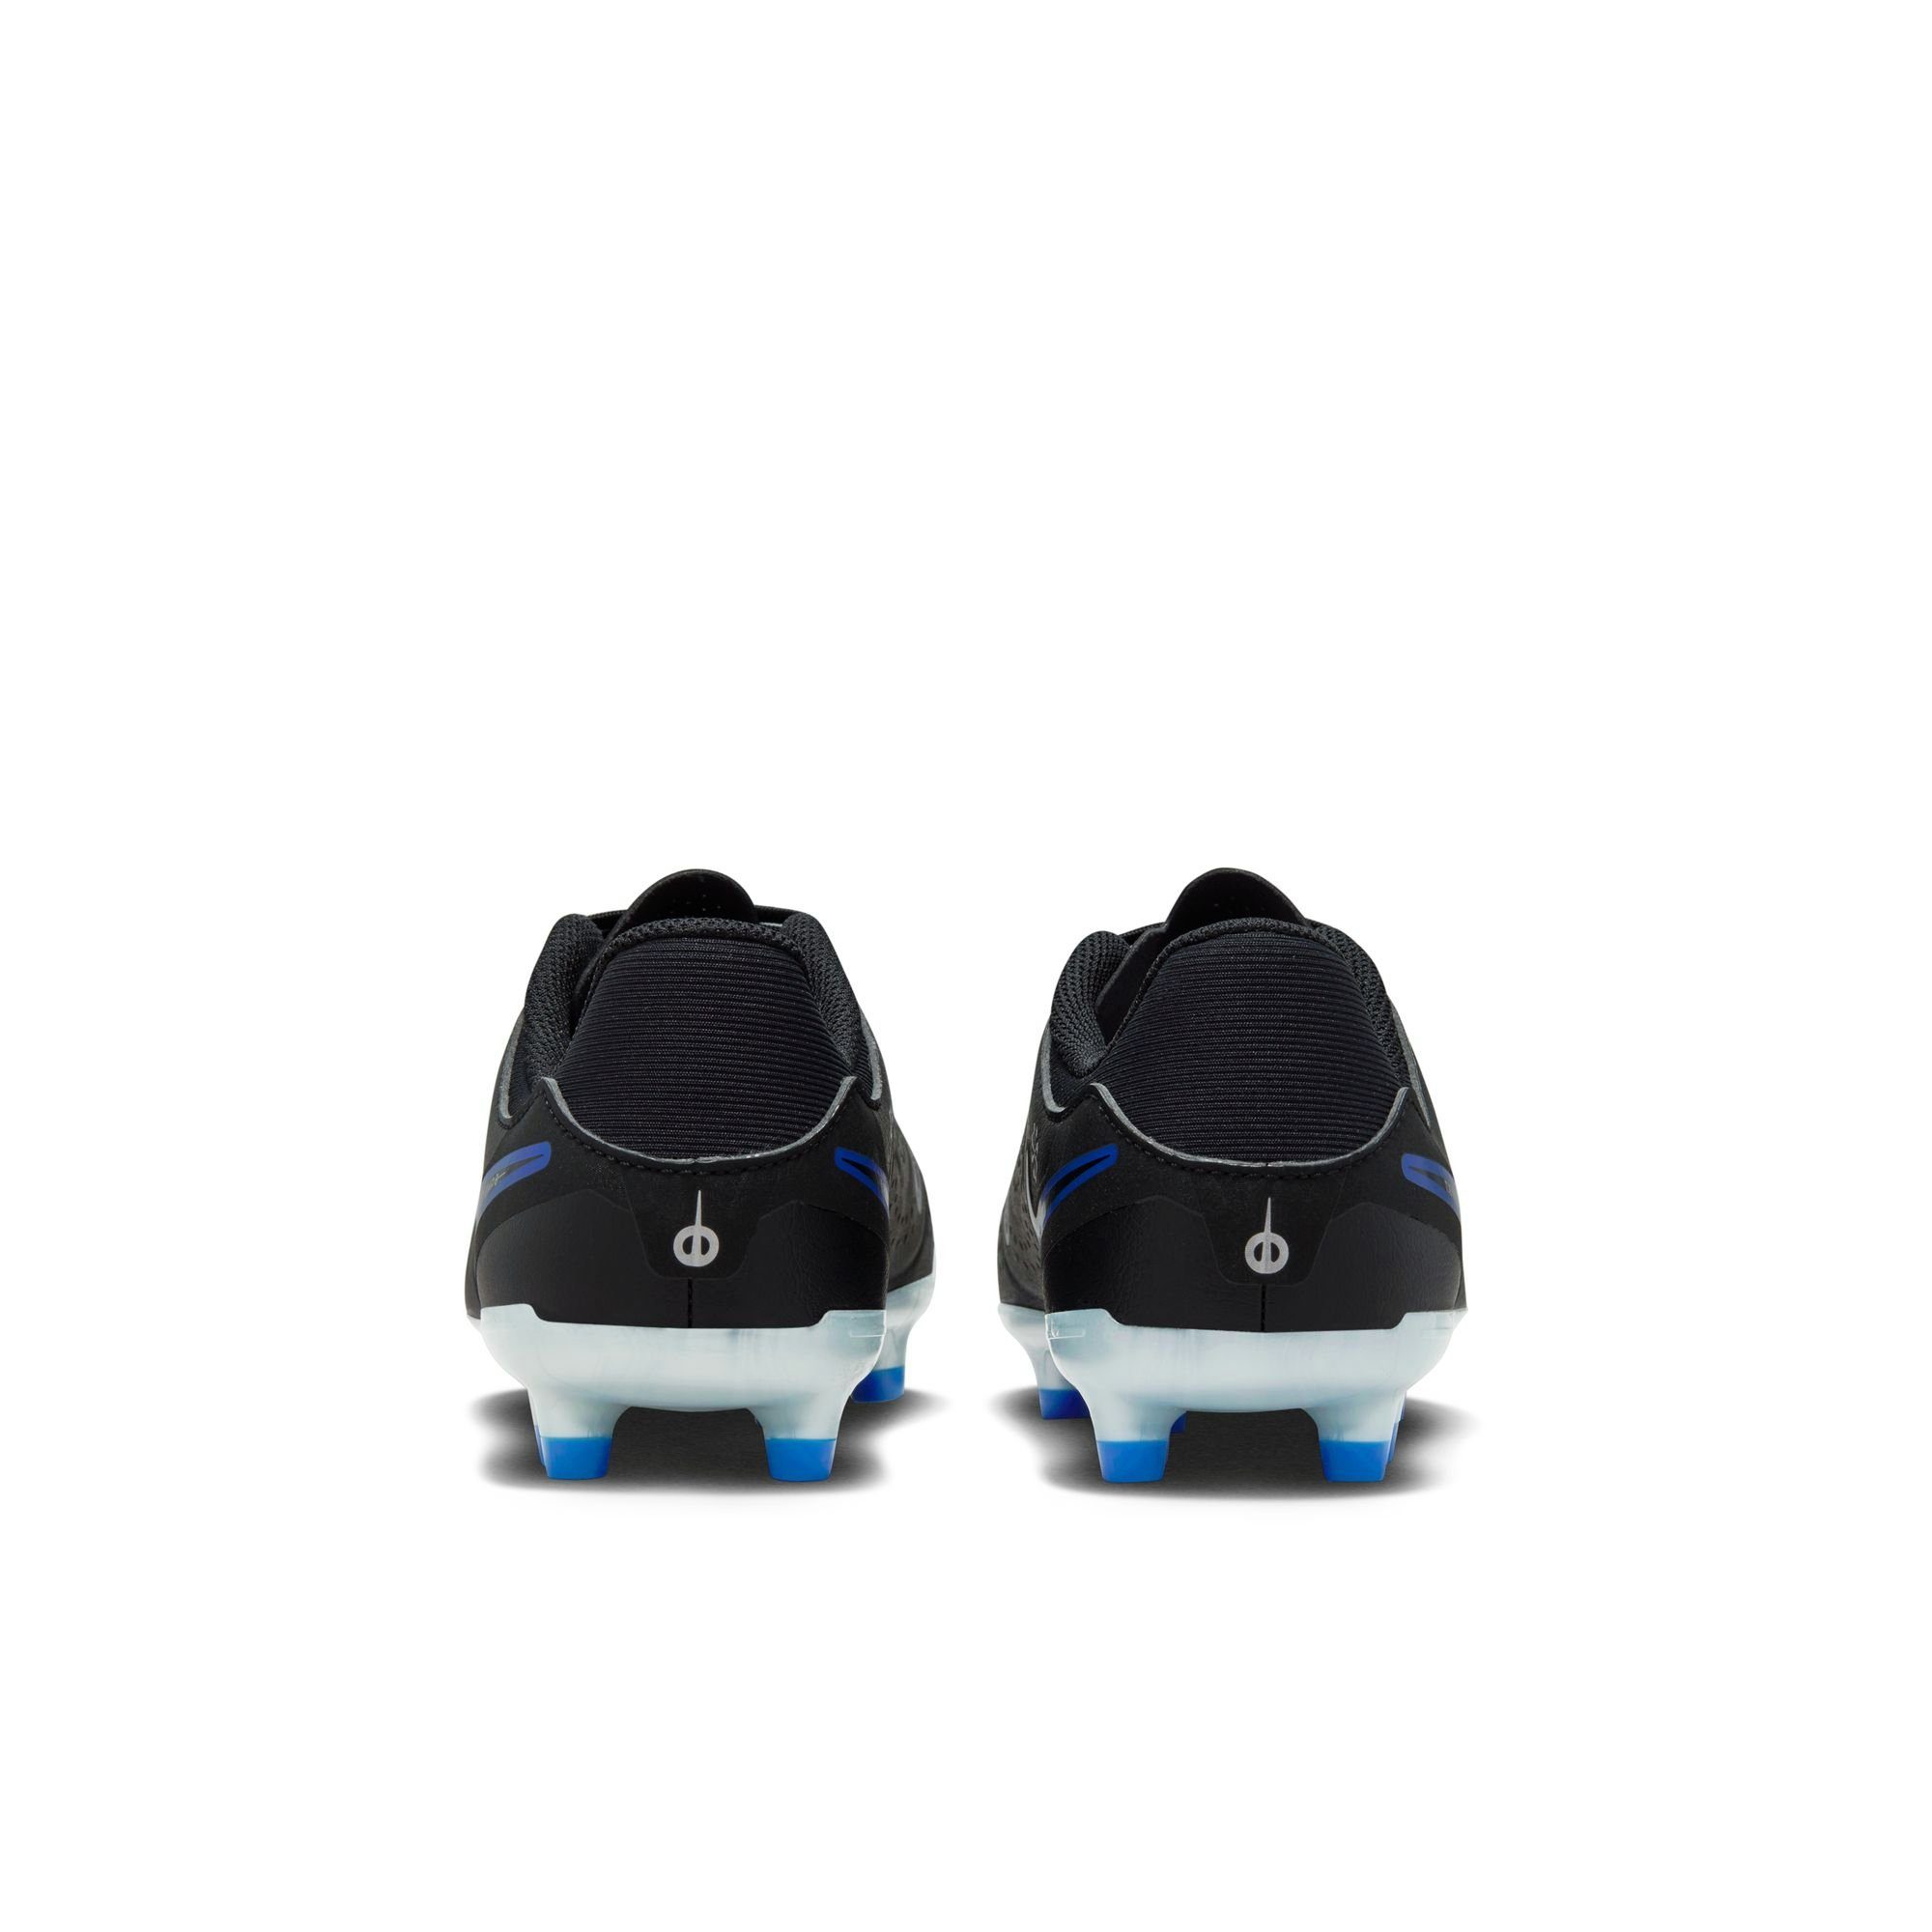 FG/MG ACADEMY JR 10 LEGEND black-chrome Fußballschuh Nike